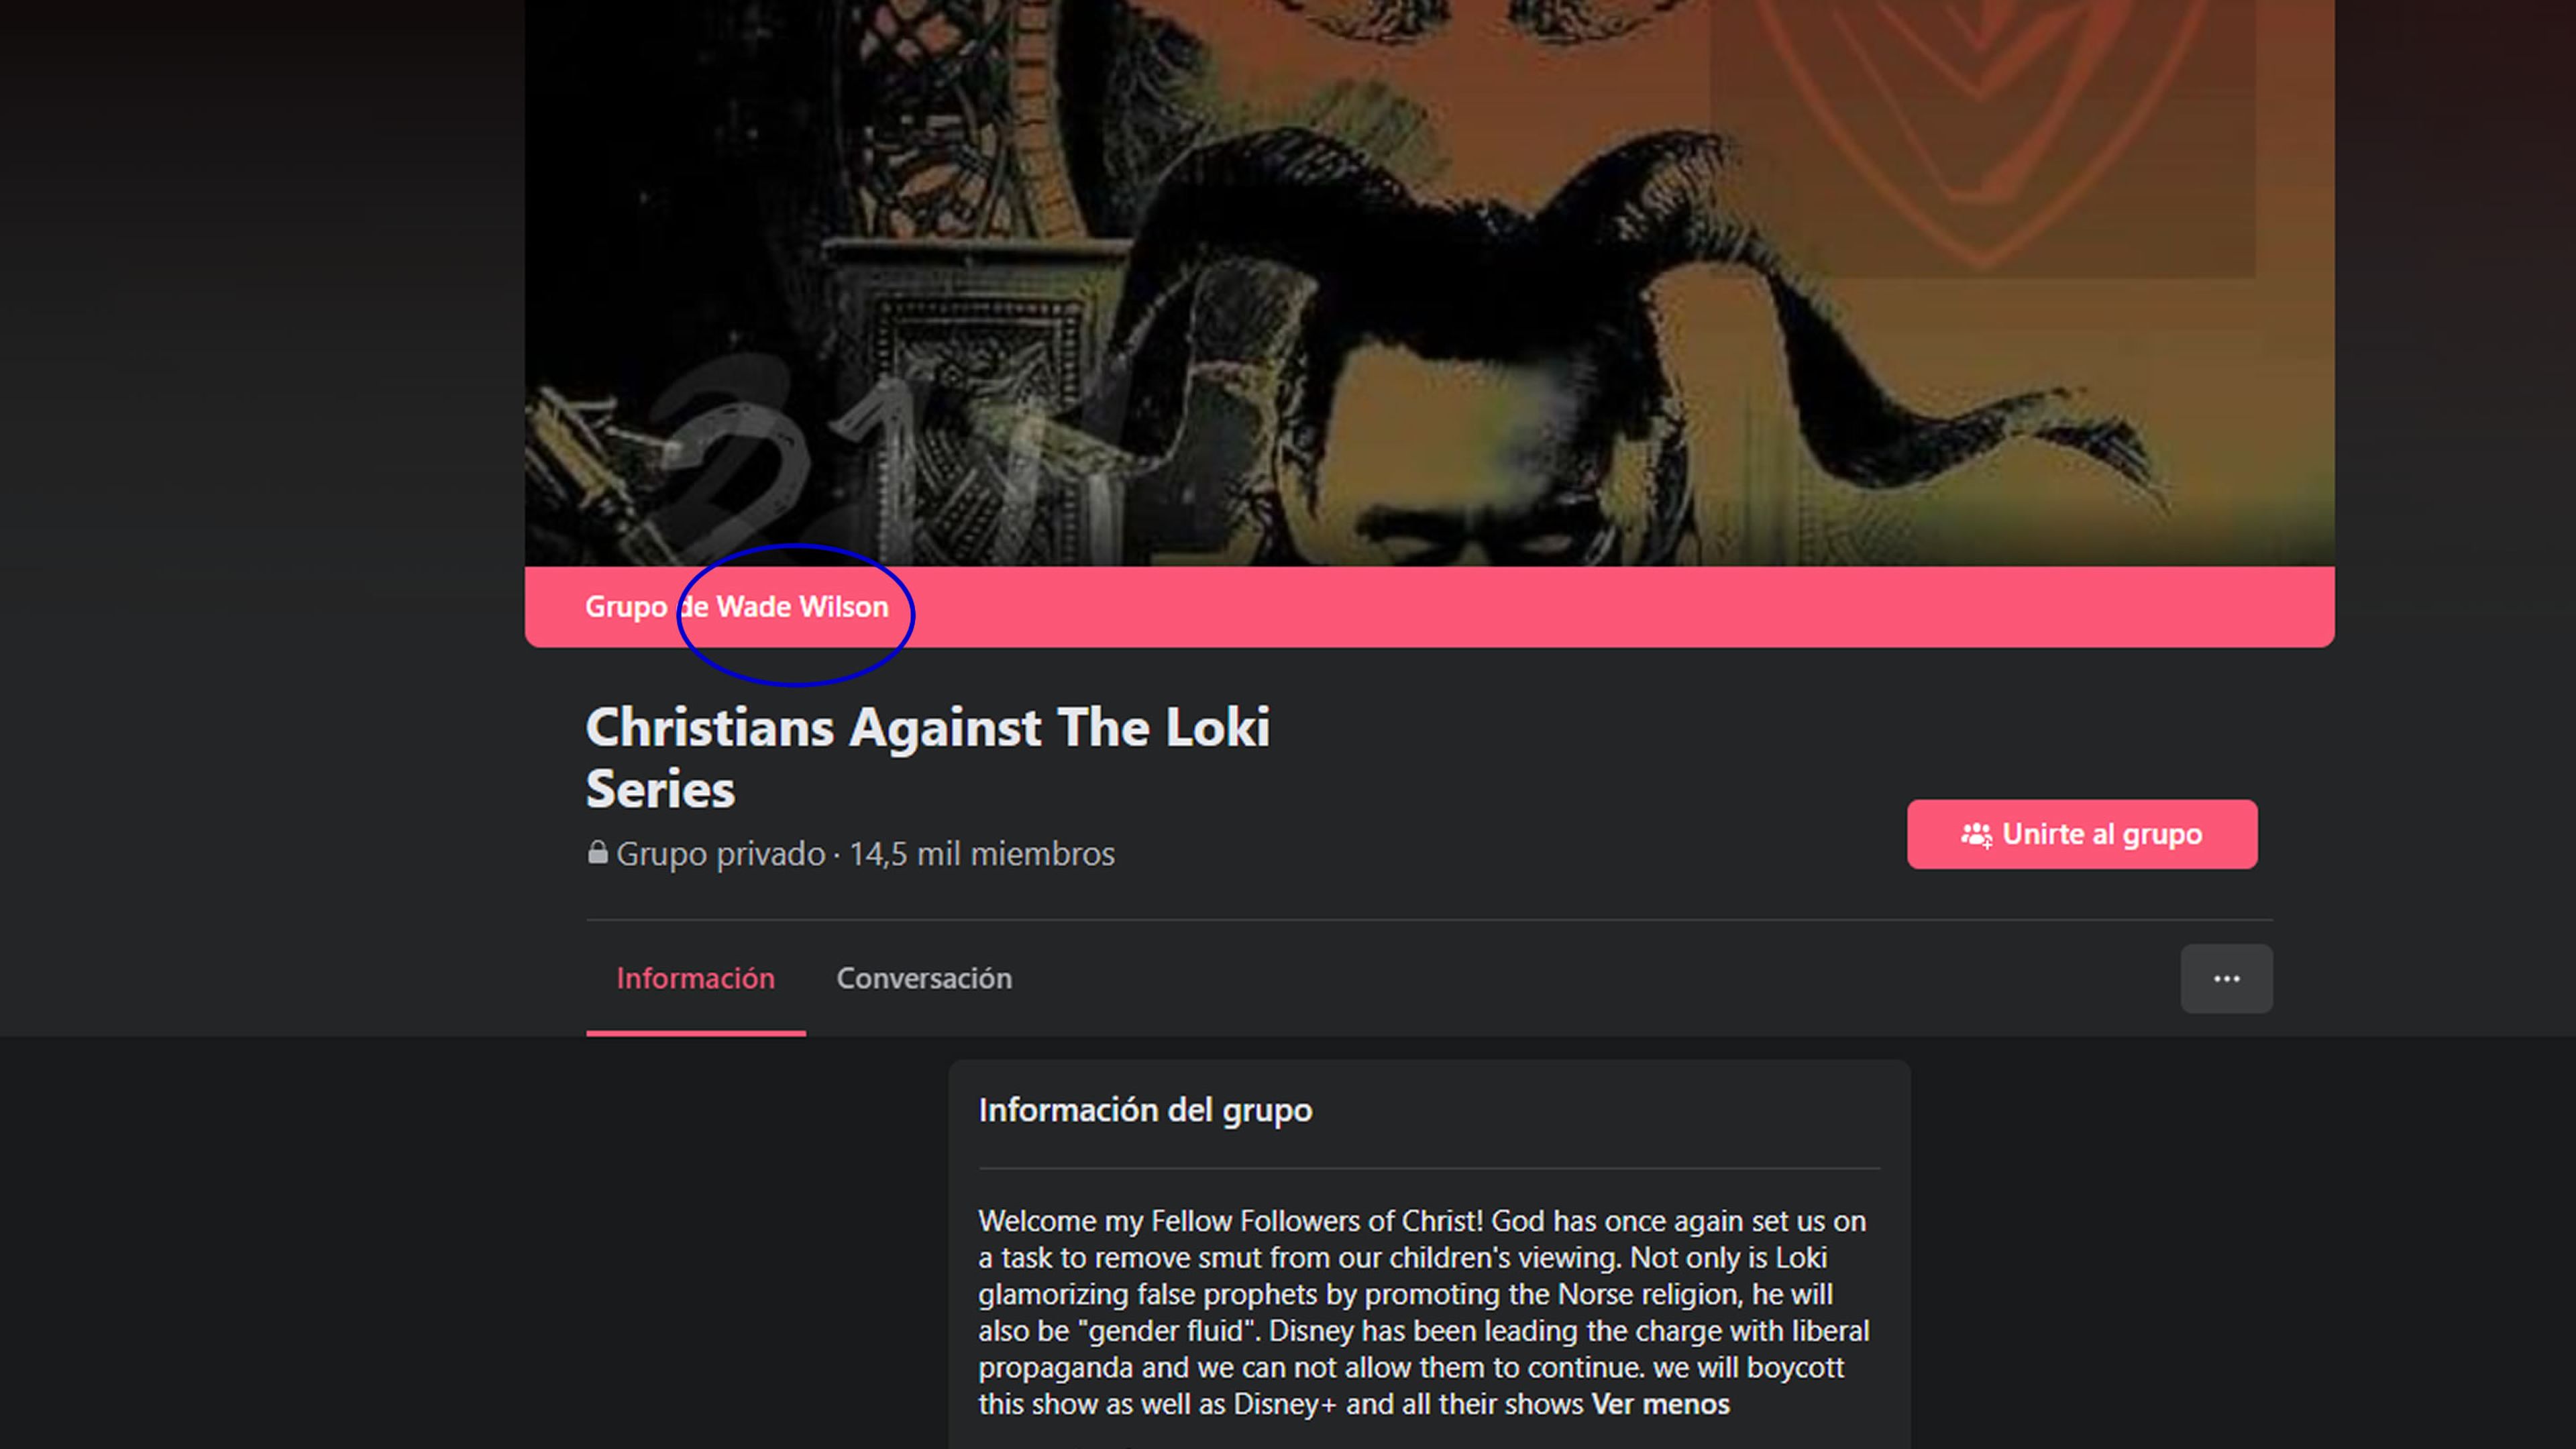 Grupo cristiano "anti-Loki" creado por Wade Wilson